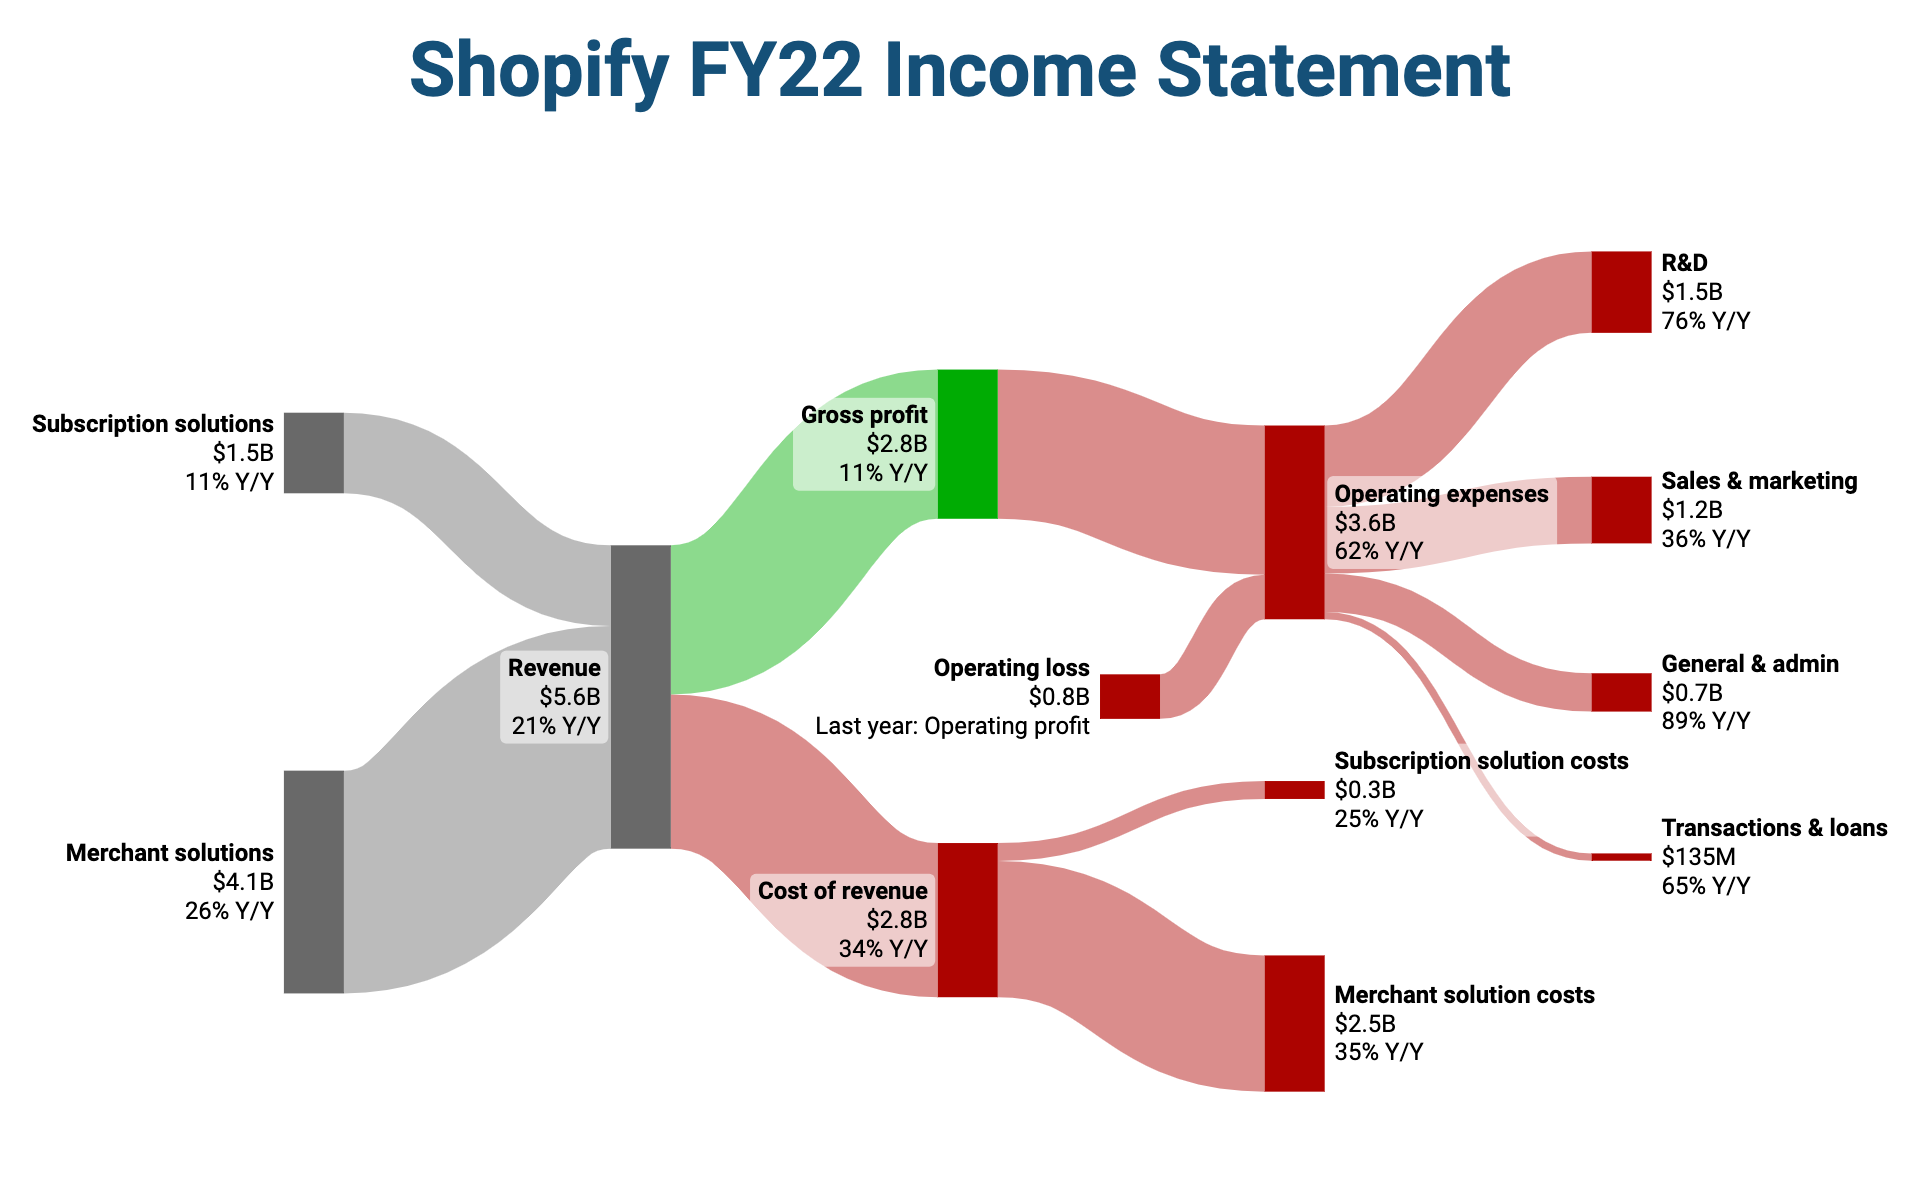 Sankey diagram of Shopify's 2022 income statement